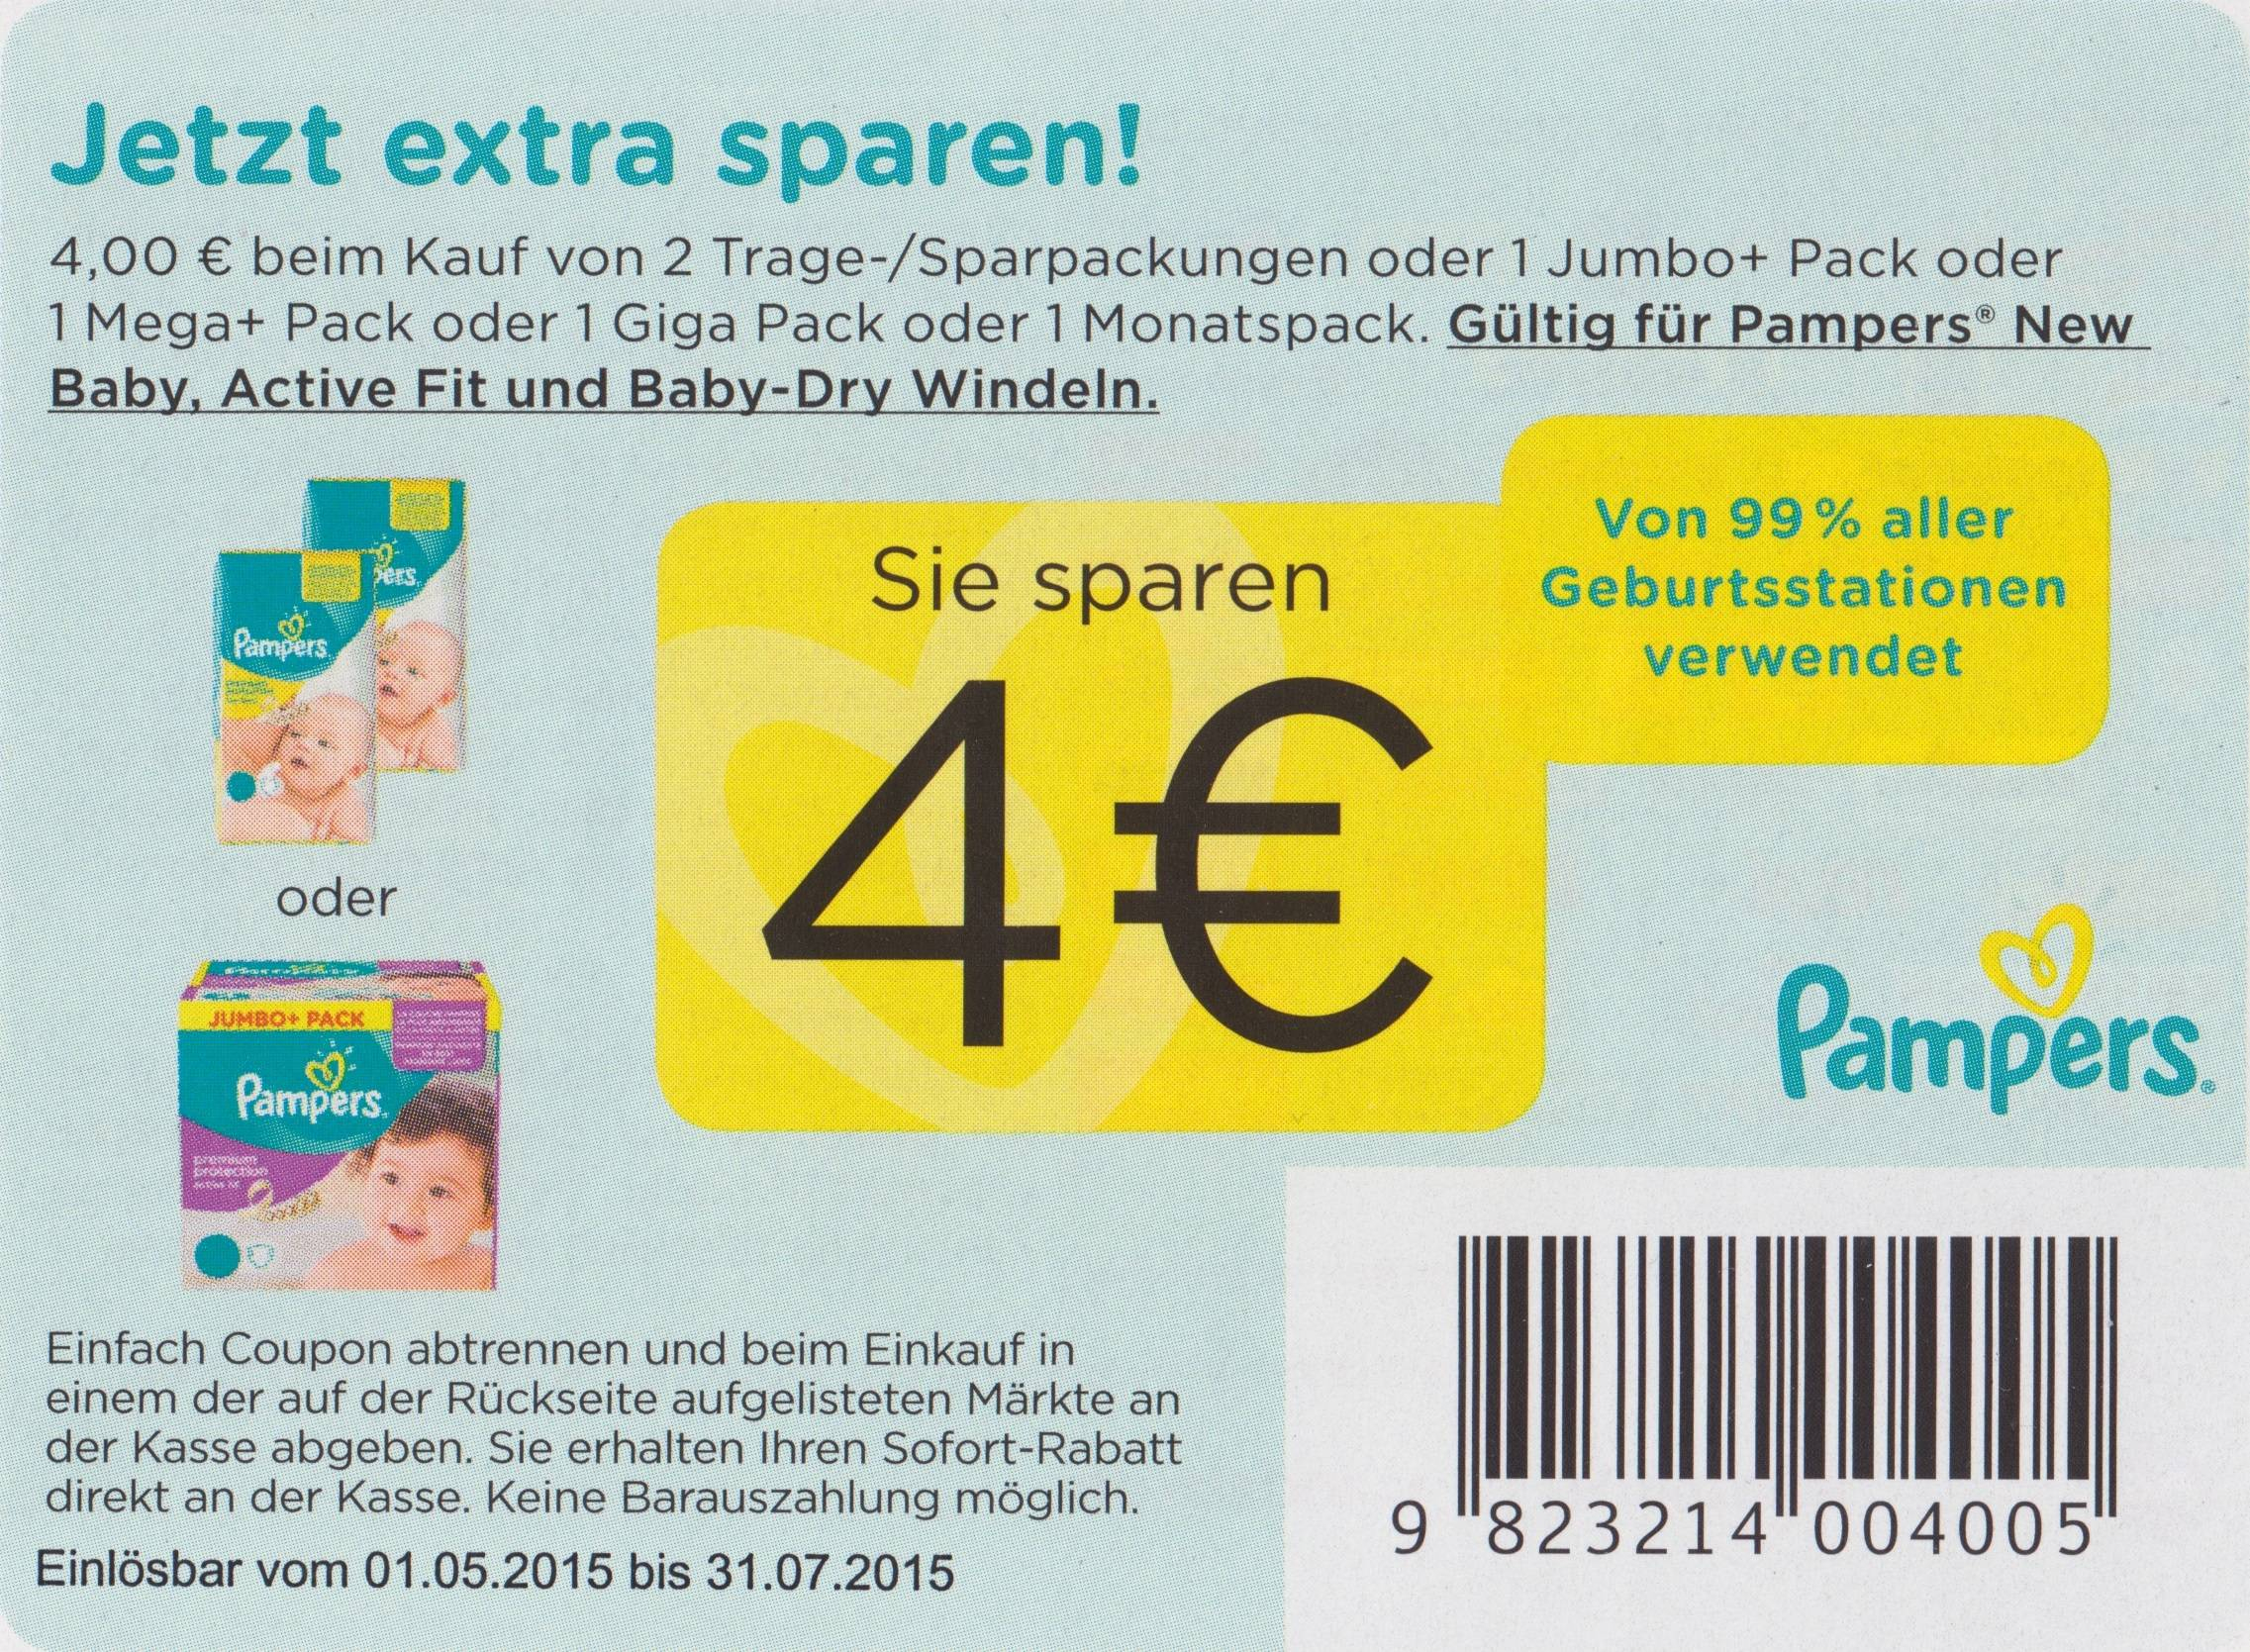 Pampers Coupons Zum Ausdrucken 2018 - Deals Birthday Party Supplies - Free Printable Spiriva Coupons